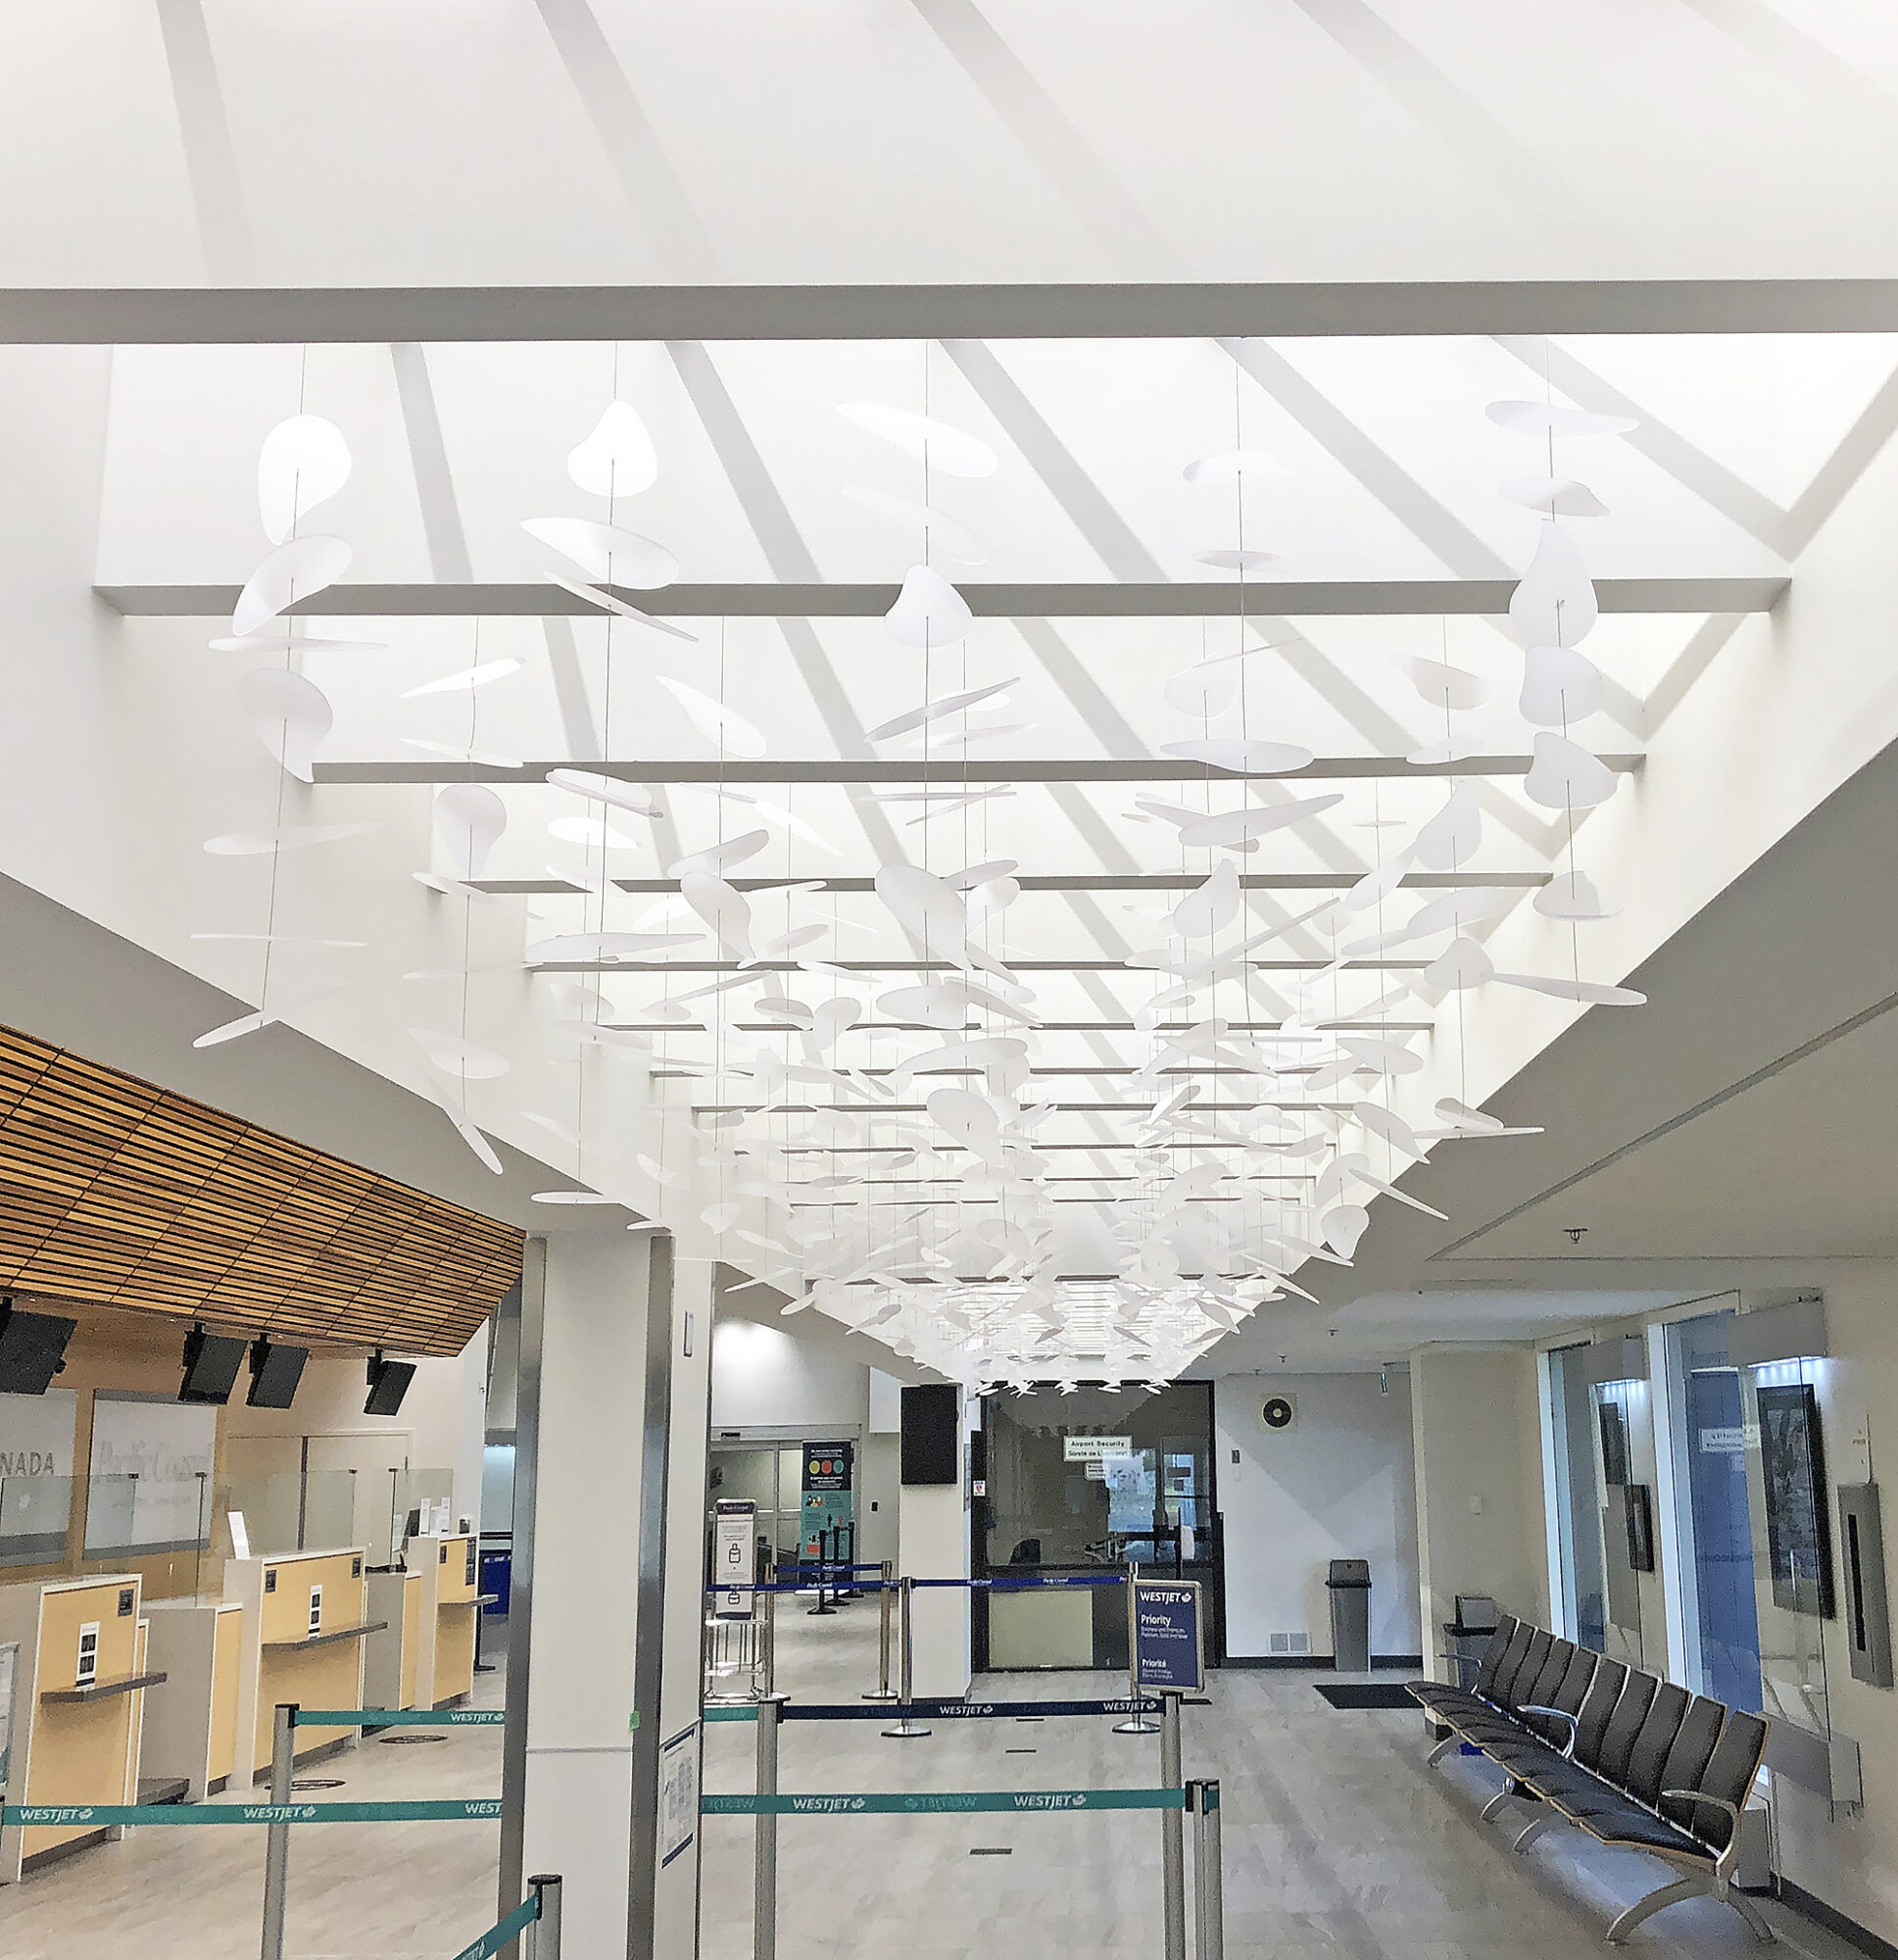 Penticton Airport – Themeworks Pendant Fixture at Concourse